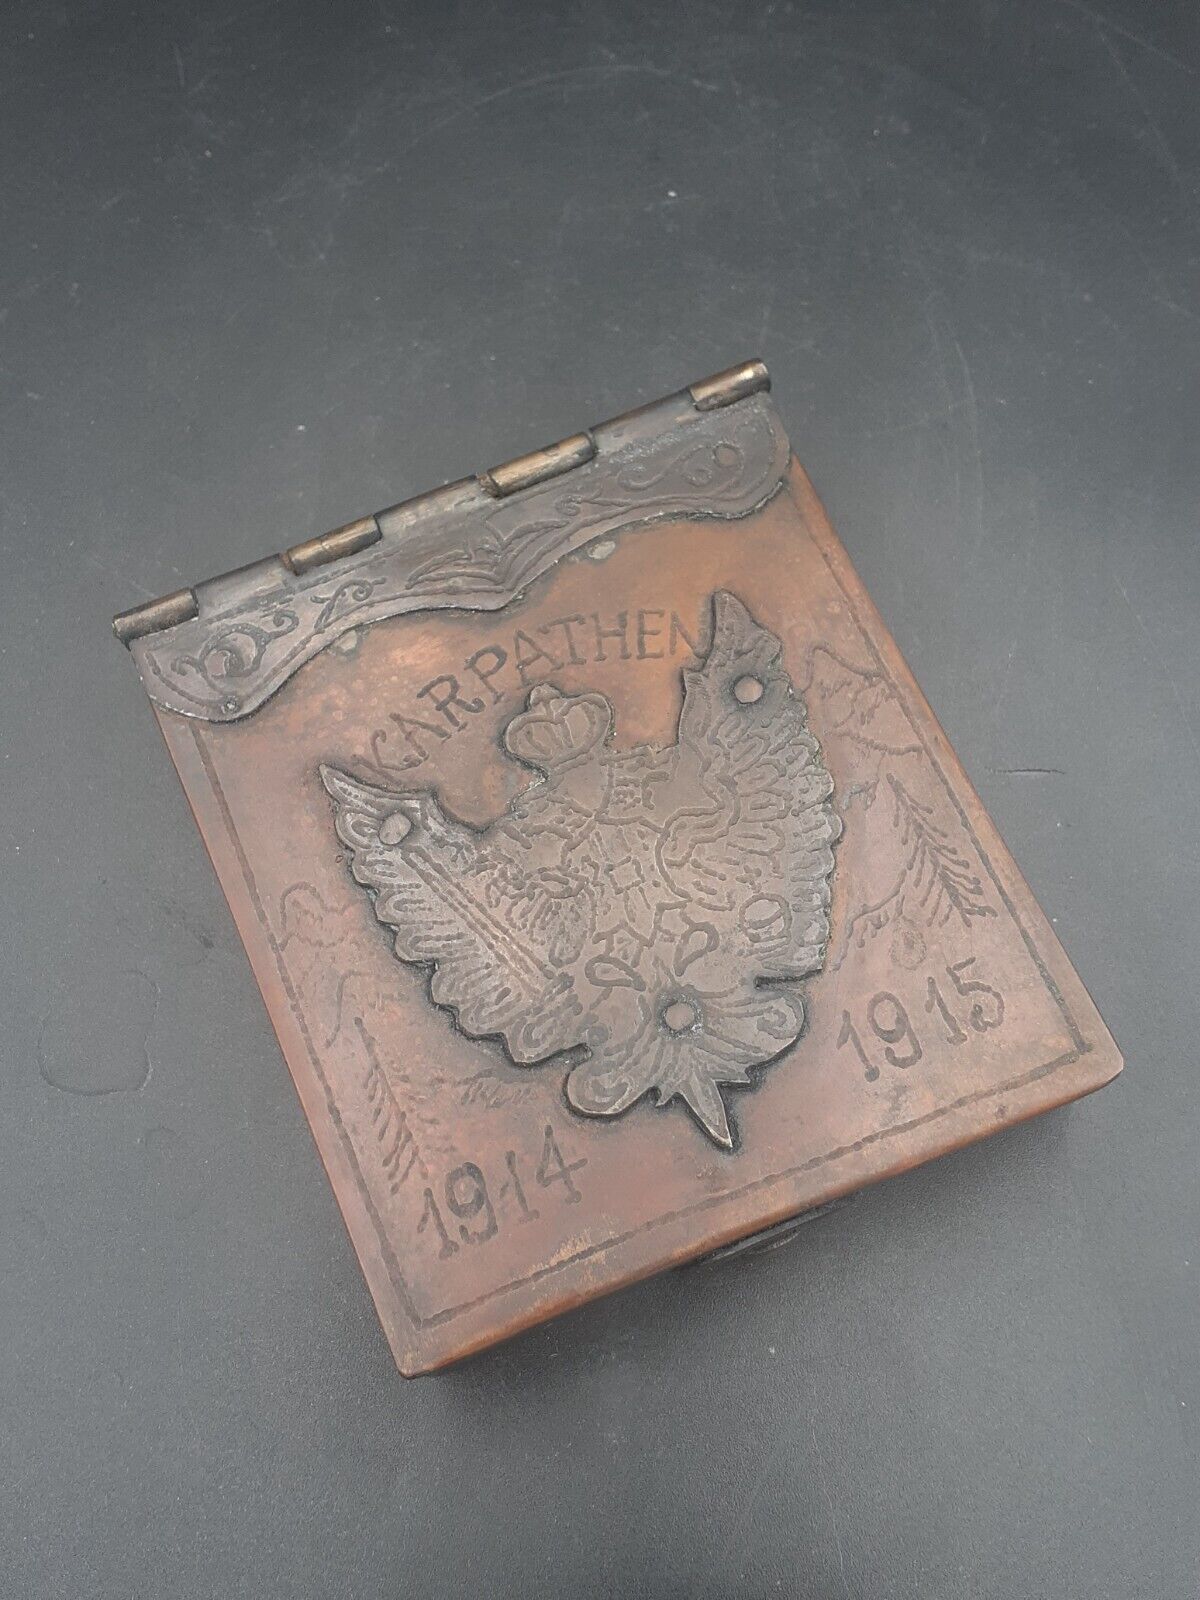 Trench art WW1 cigarette case from Carpathen 1914-1915. Austria.